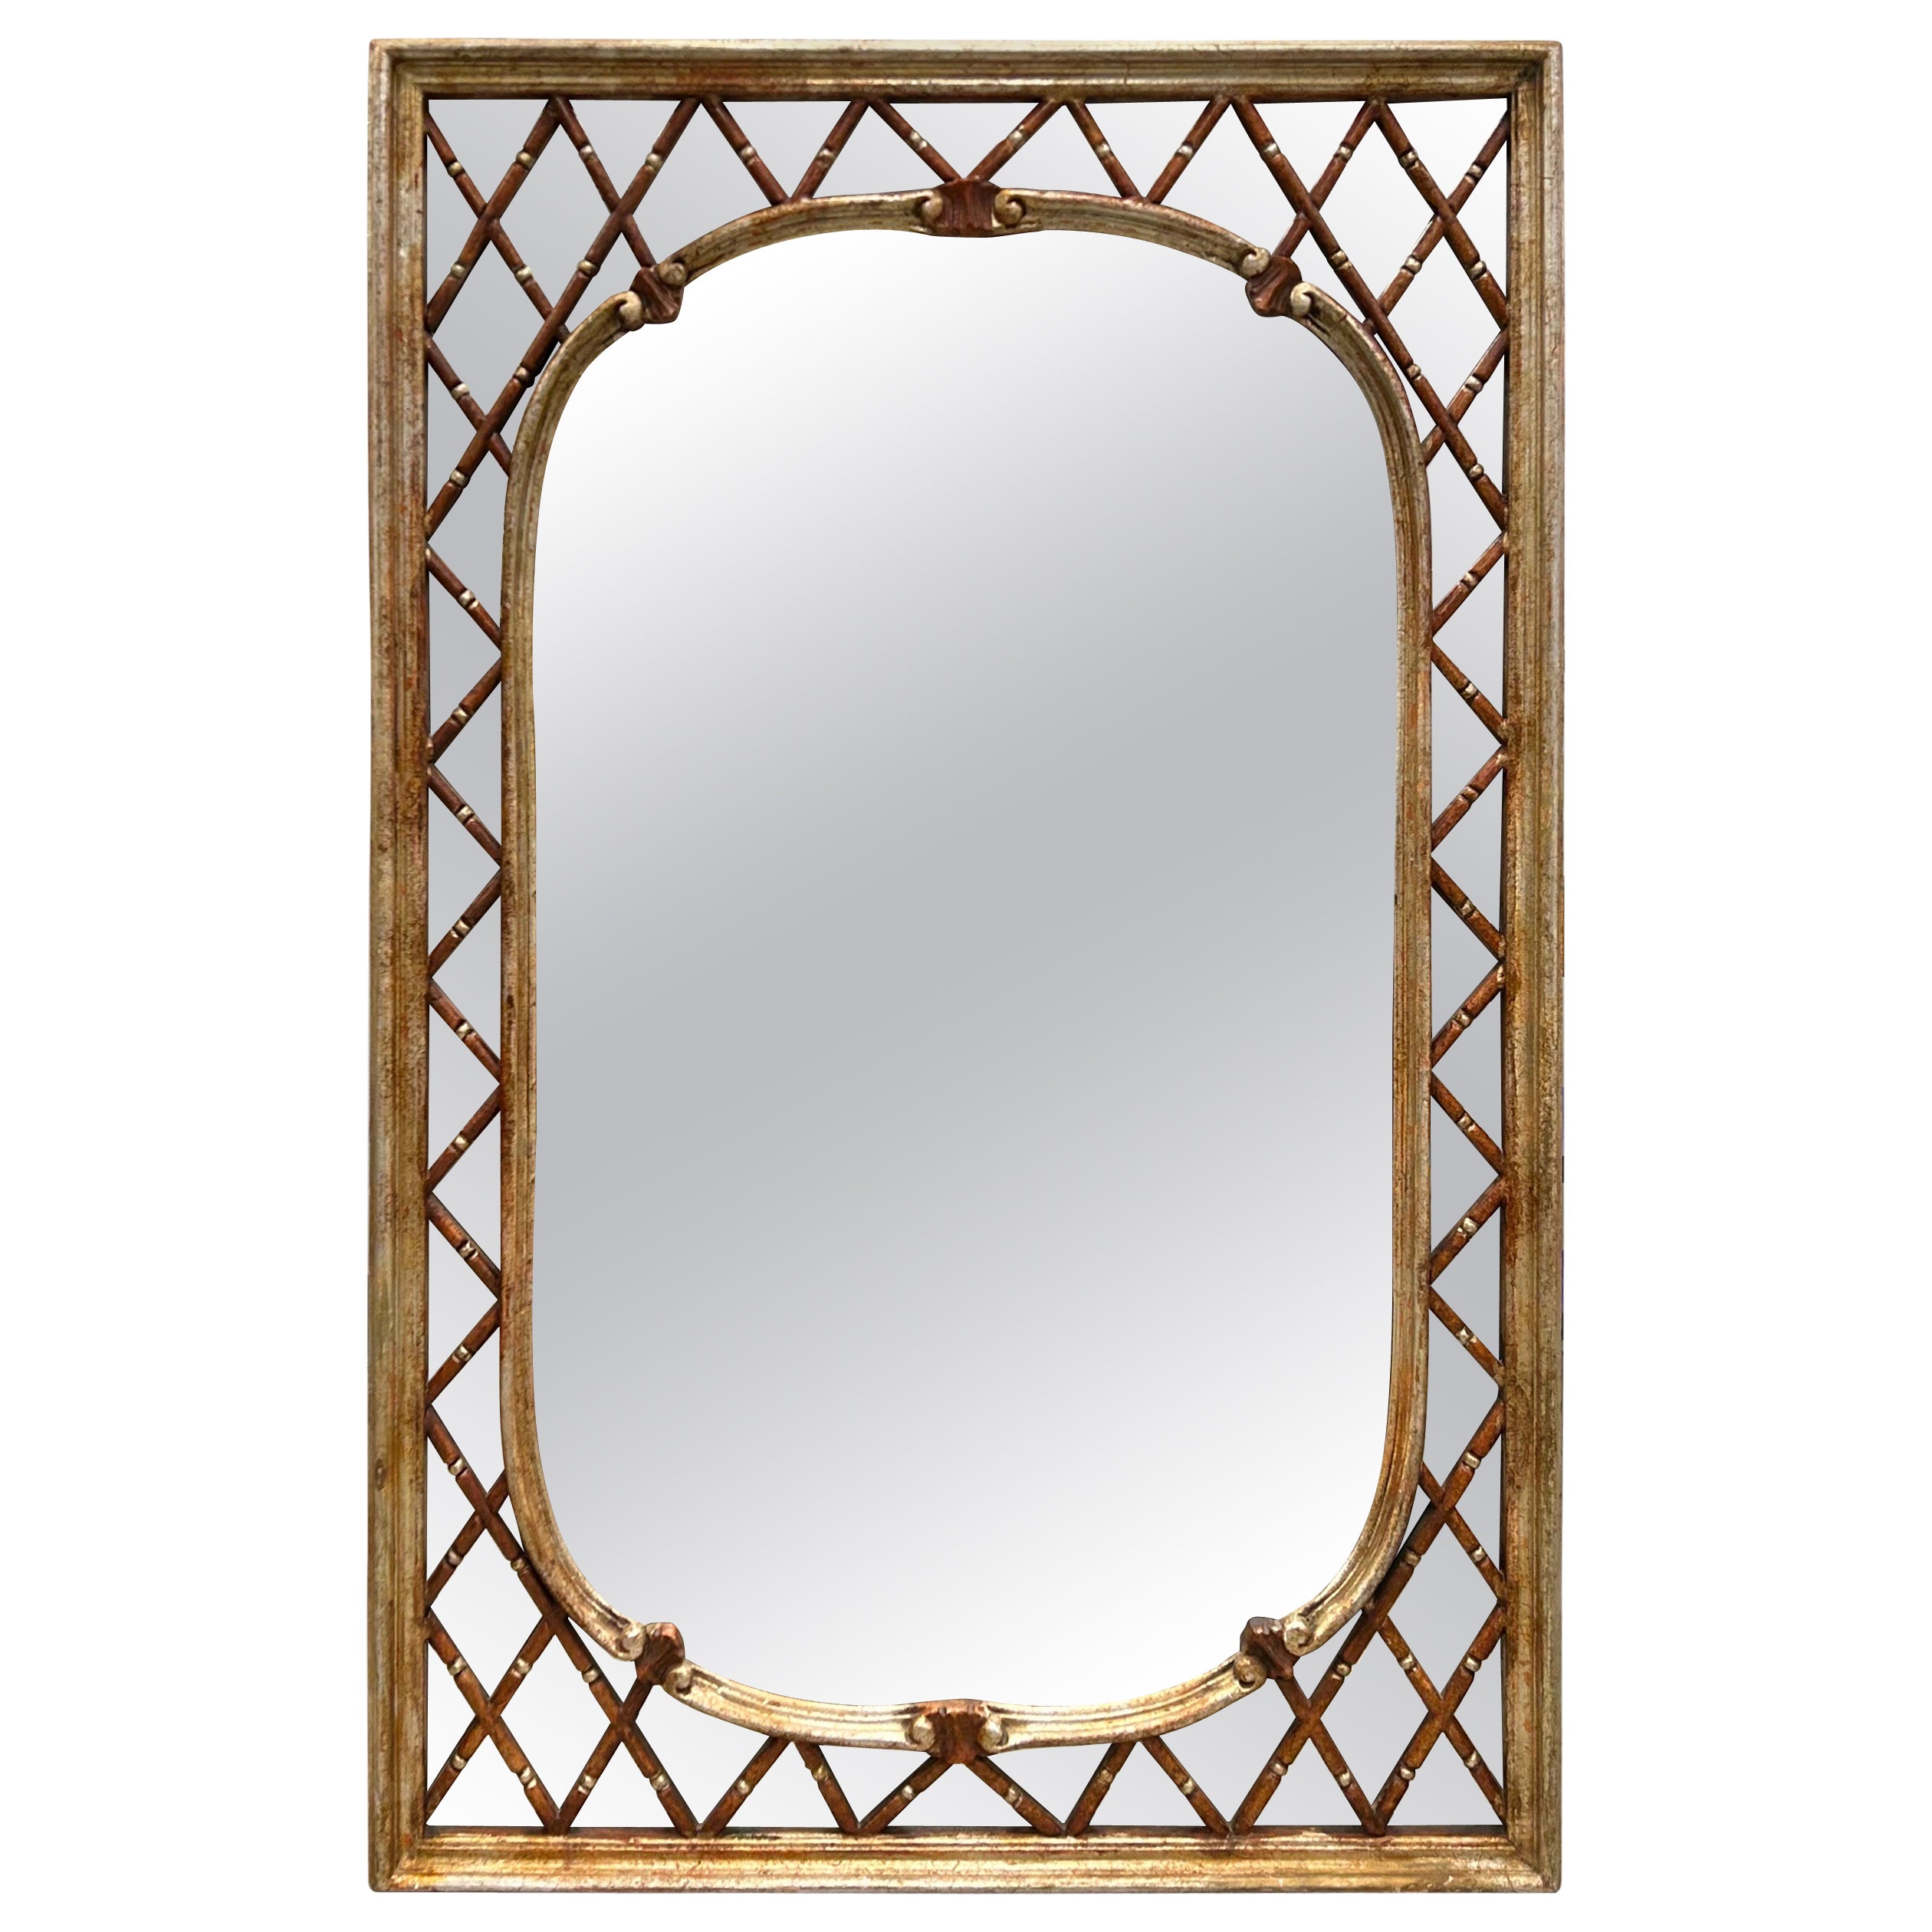 Italian Hollywood Regency Silver Gilt Lattice Mirror